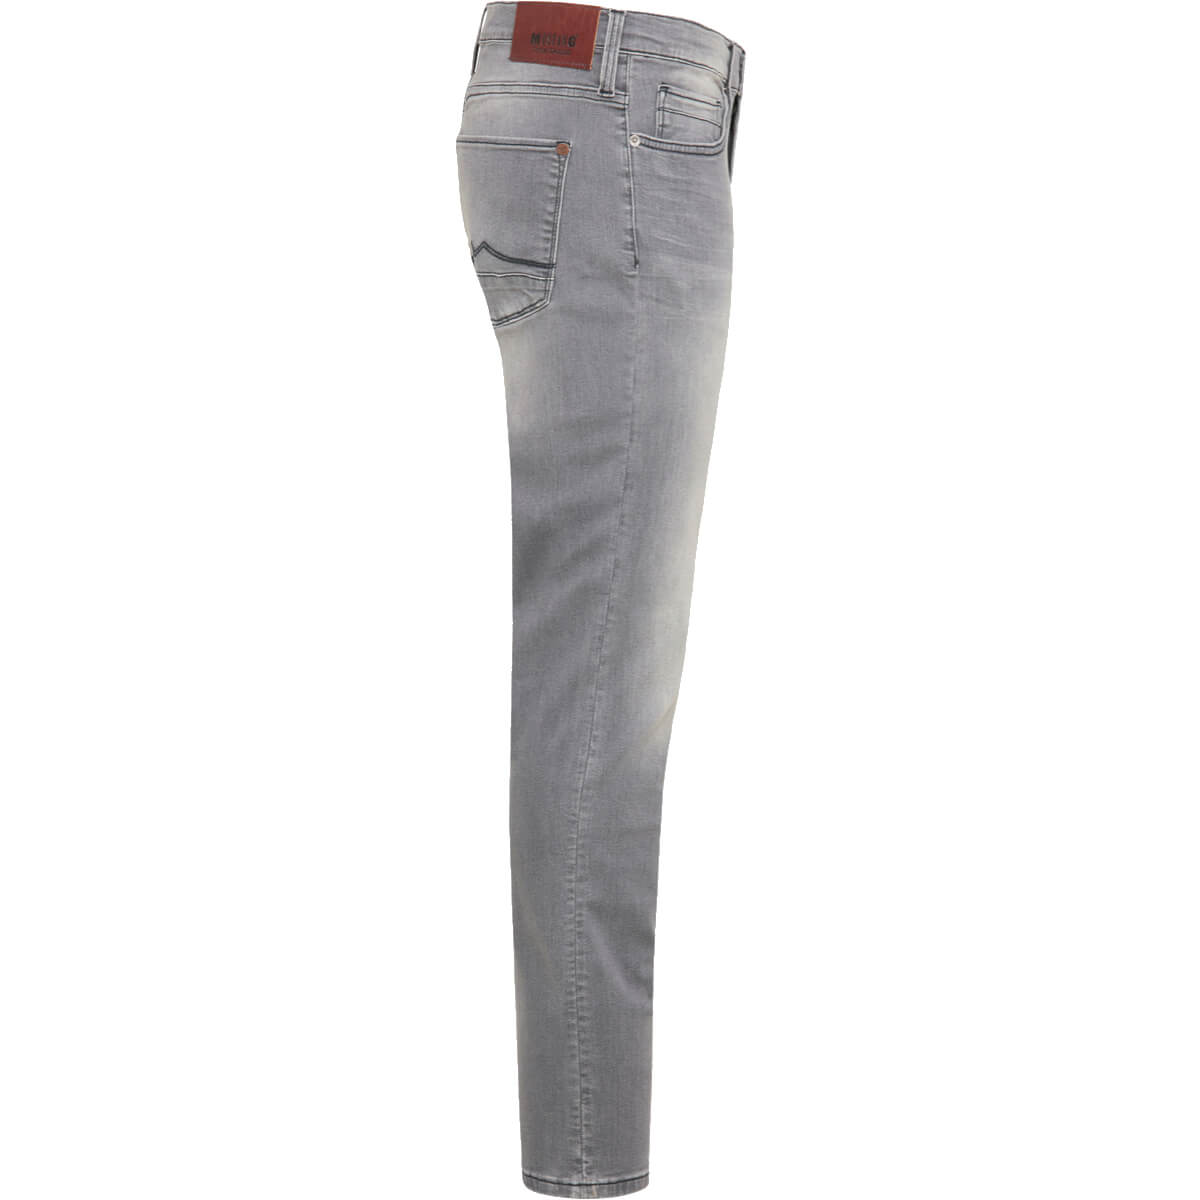 mustang jeans vegas light grey 1010574 4500 883 crop2